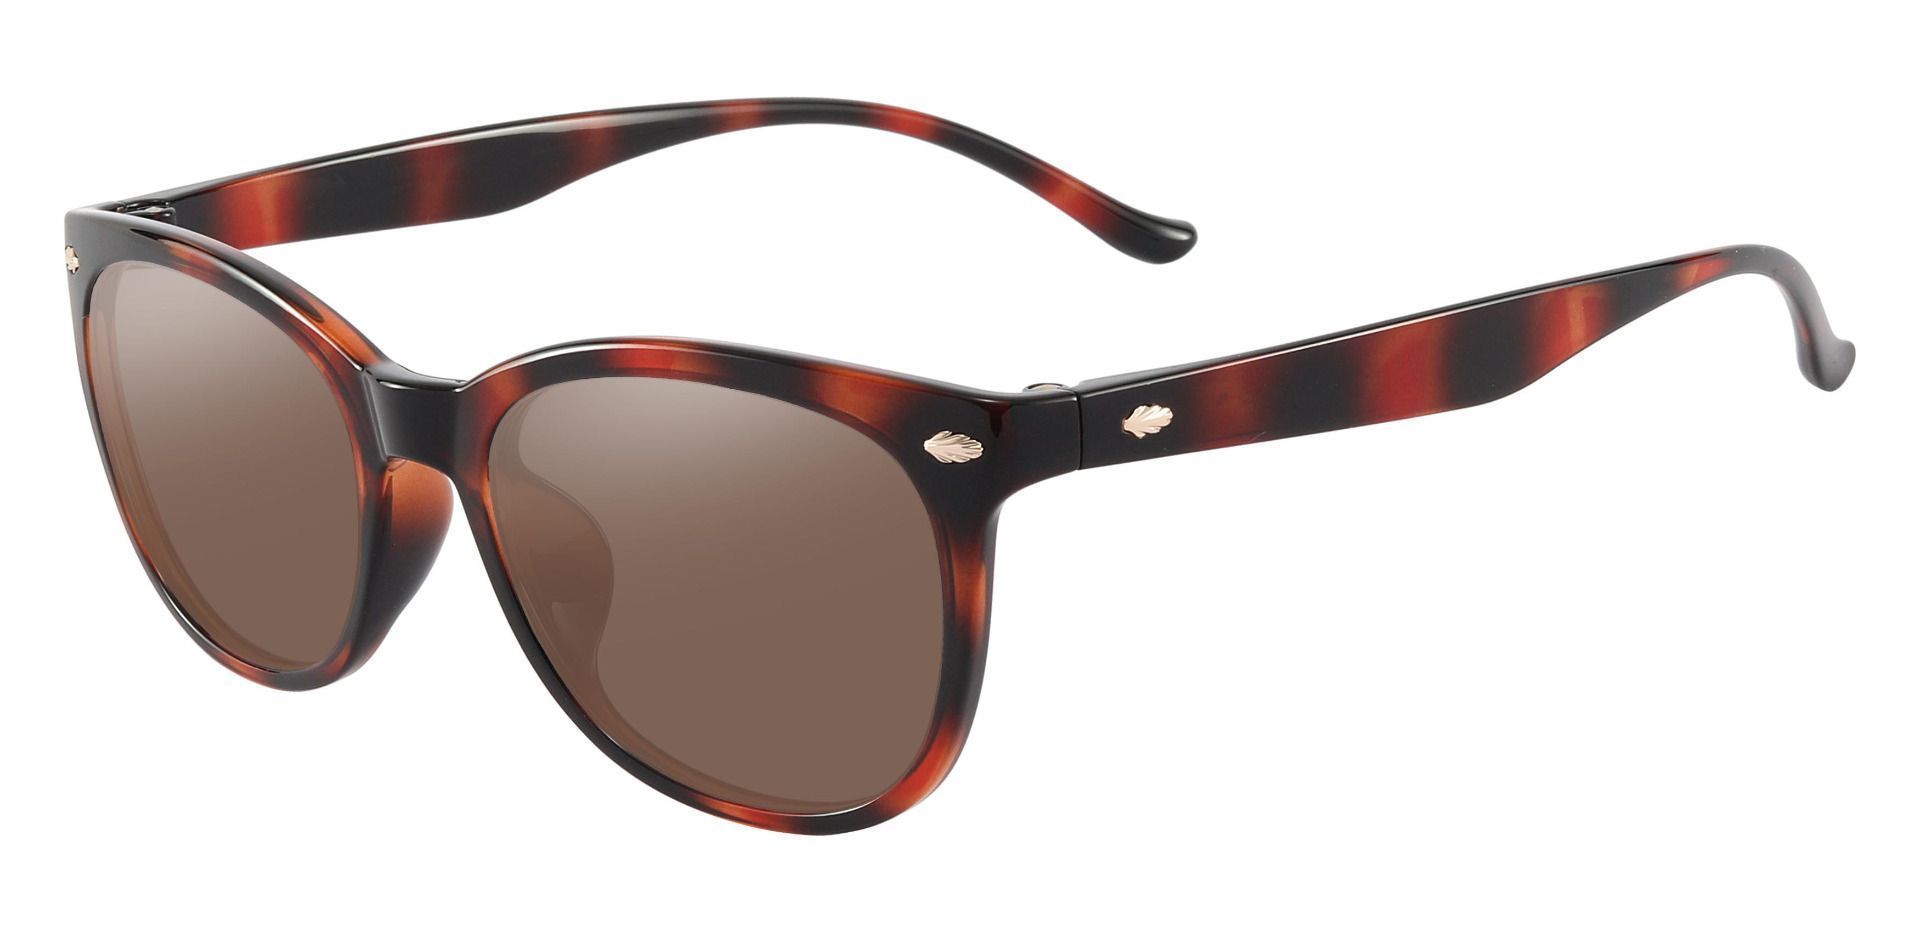 Pavilion Square Reading Sunglasses - Tortoise Frame With Brown Lenses